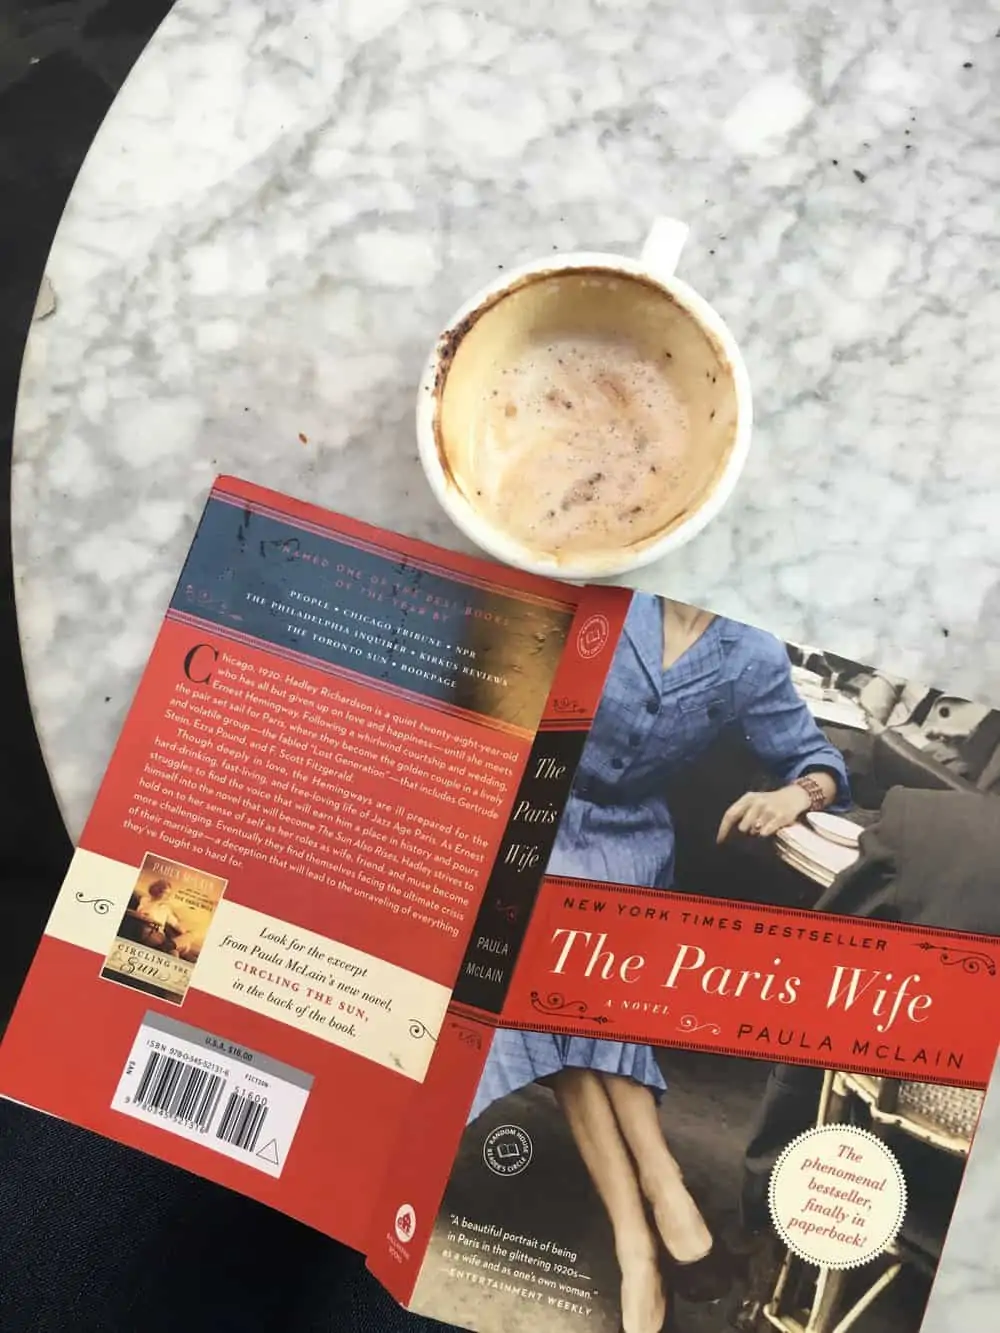 the paris wife by paula mclain for every day parisian book club